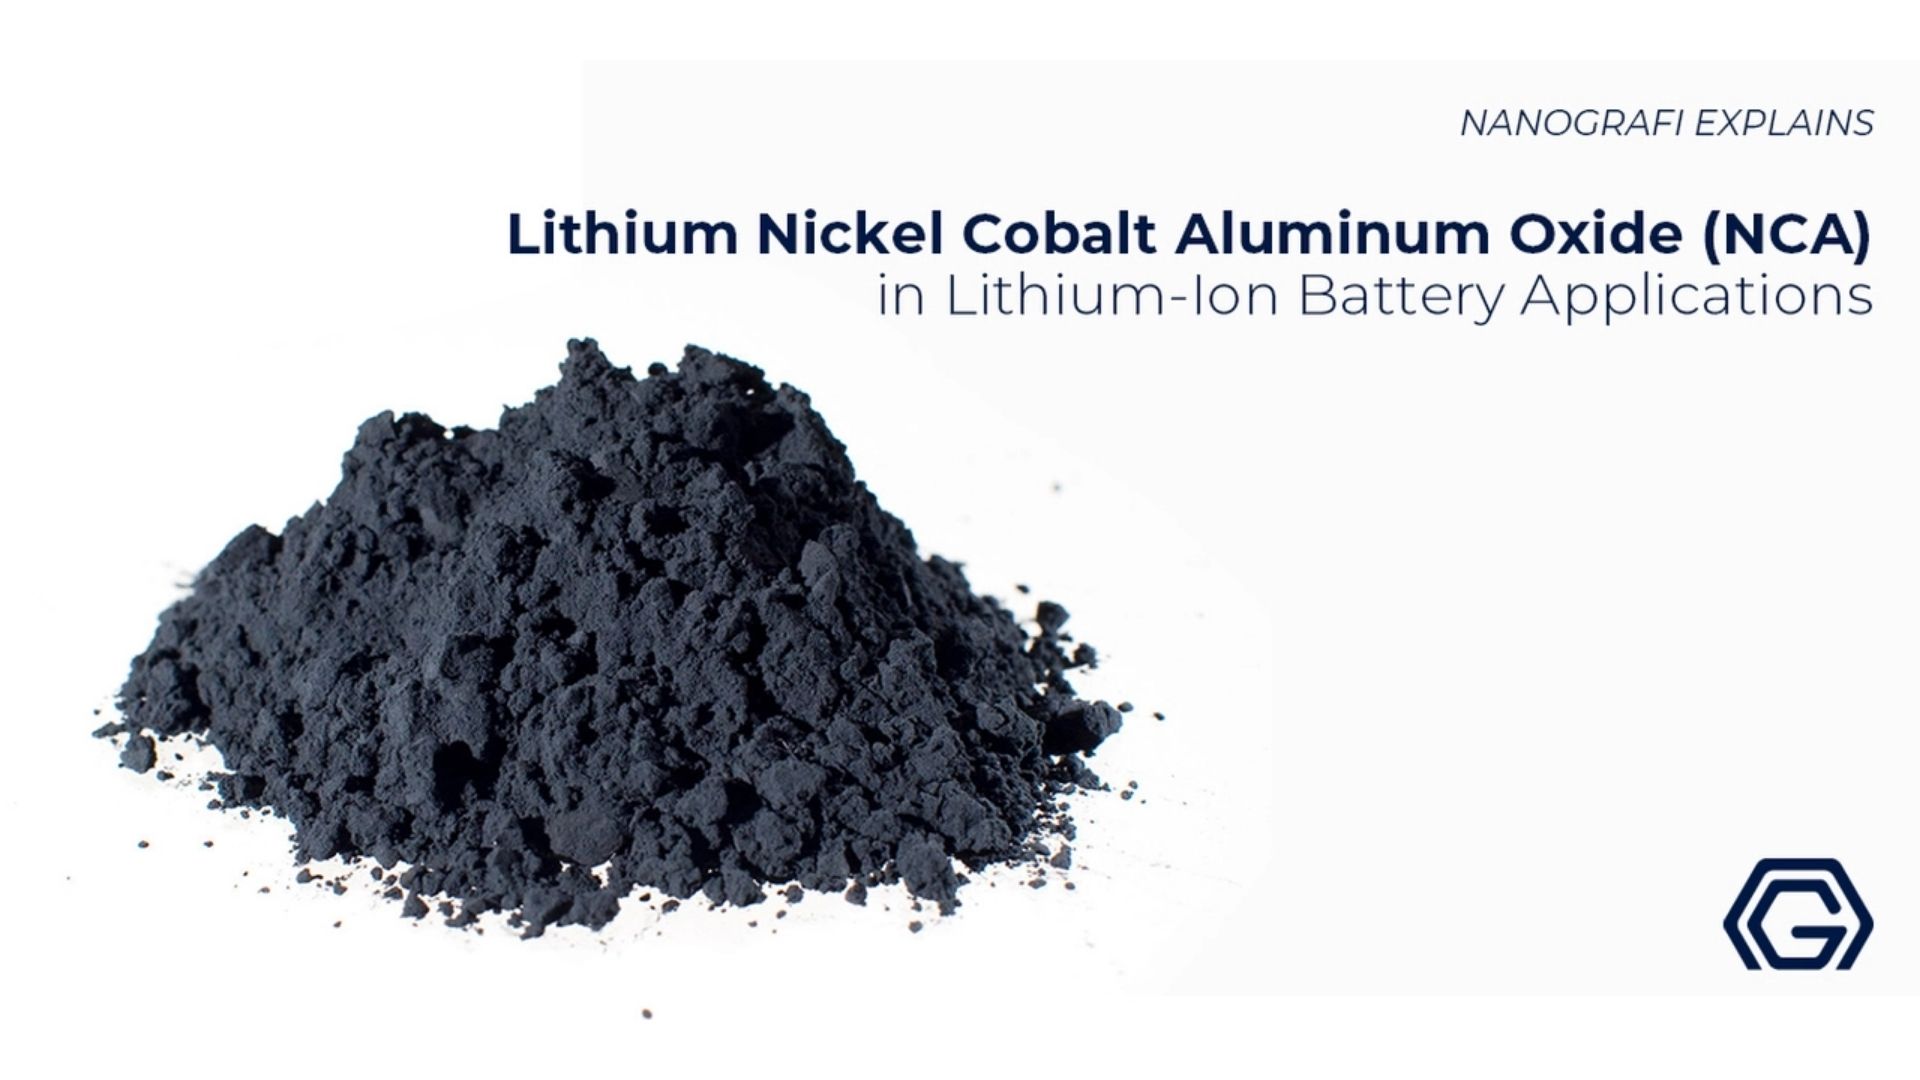 Lithium nickel cobalt aluminum oxide (NCA) in lithium-ion battery applications